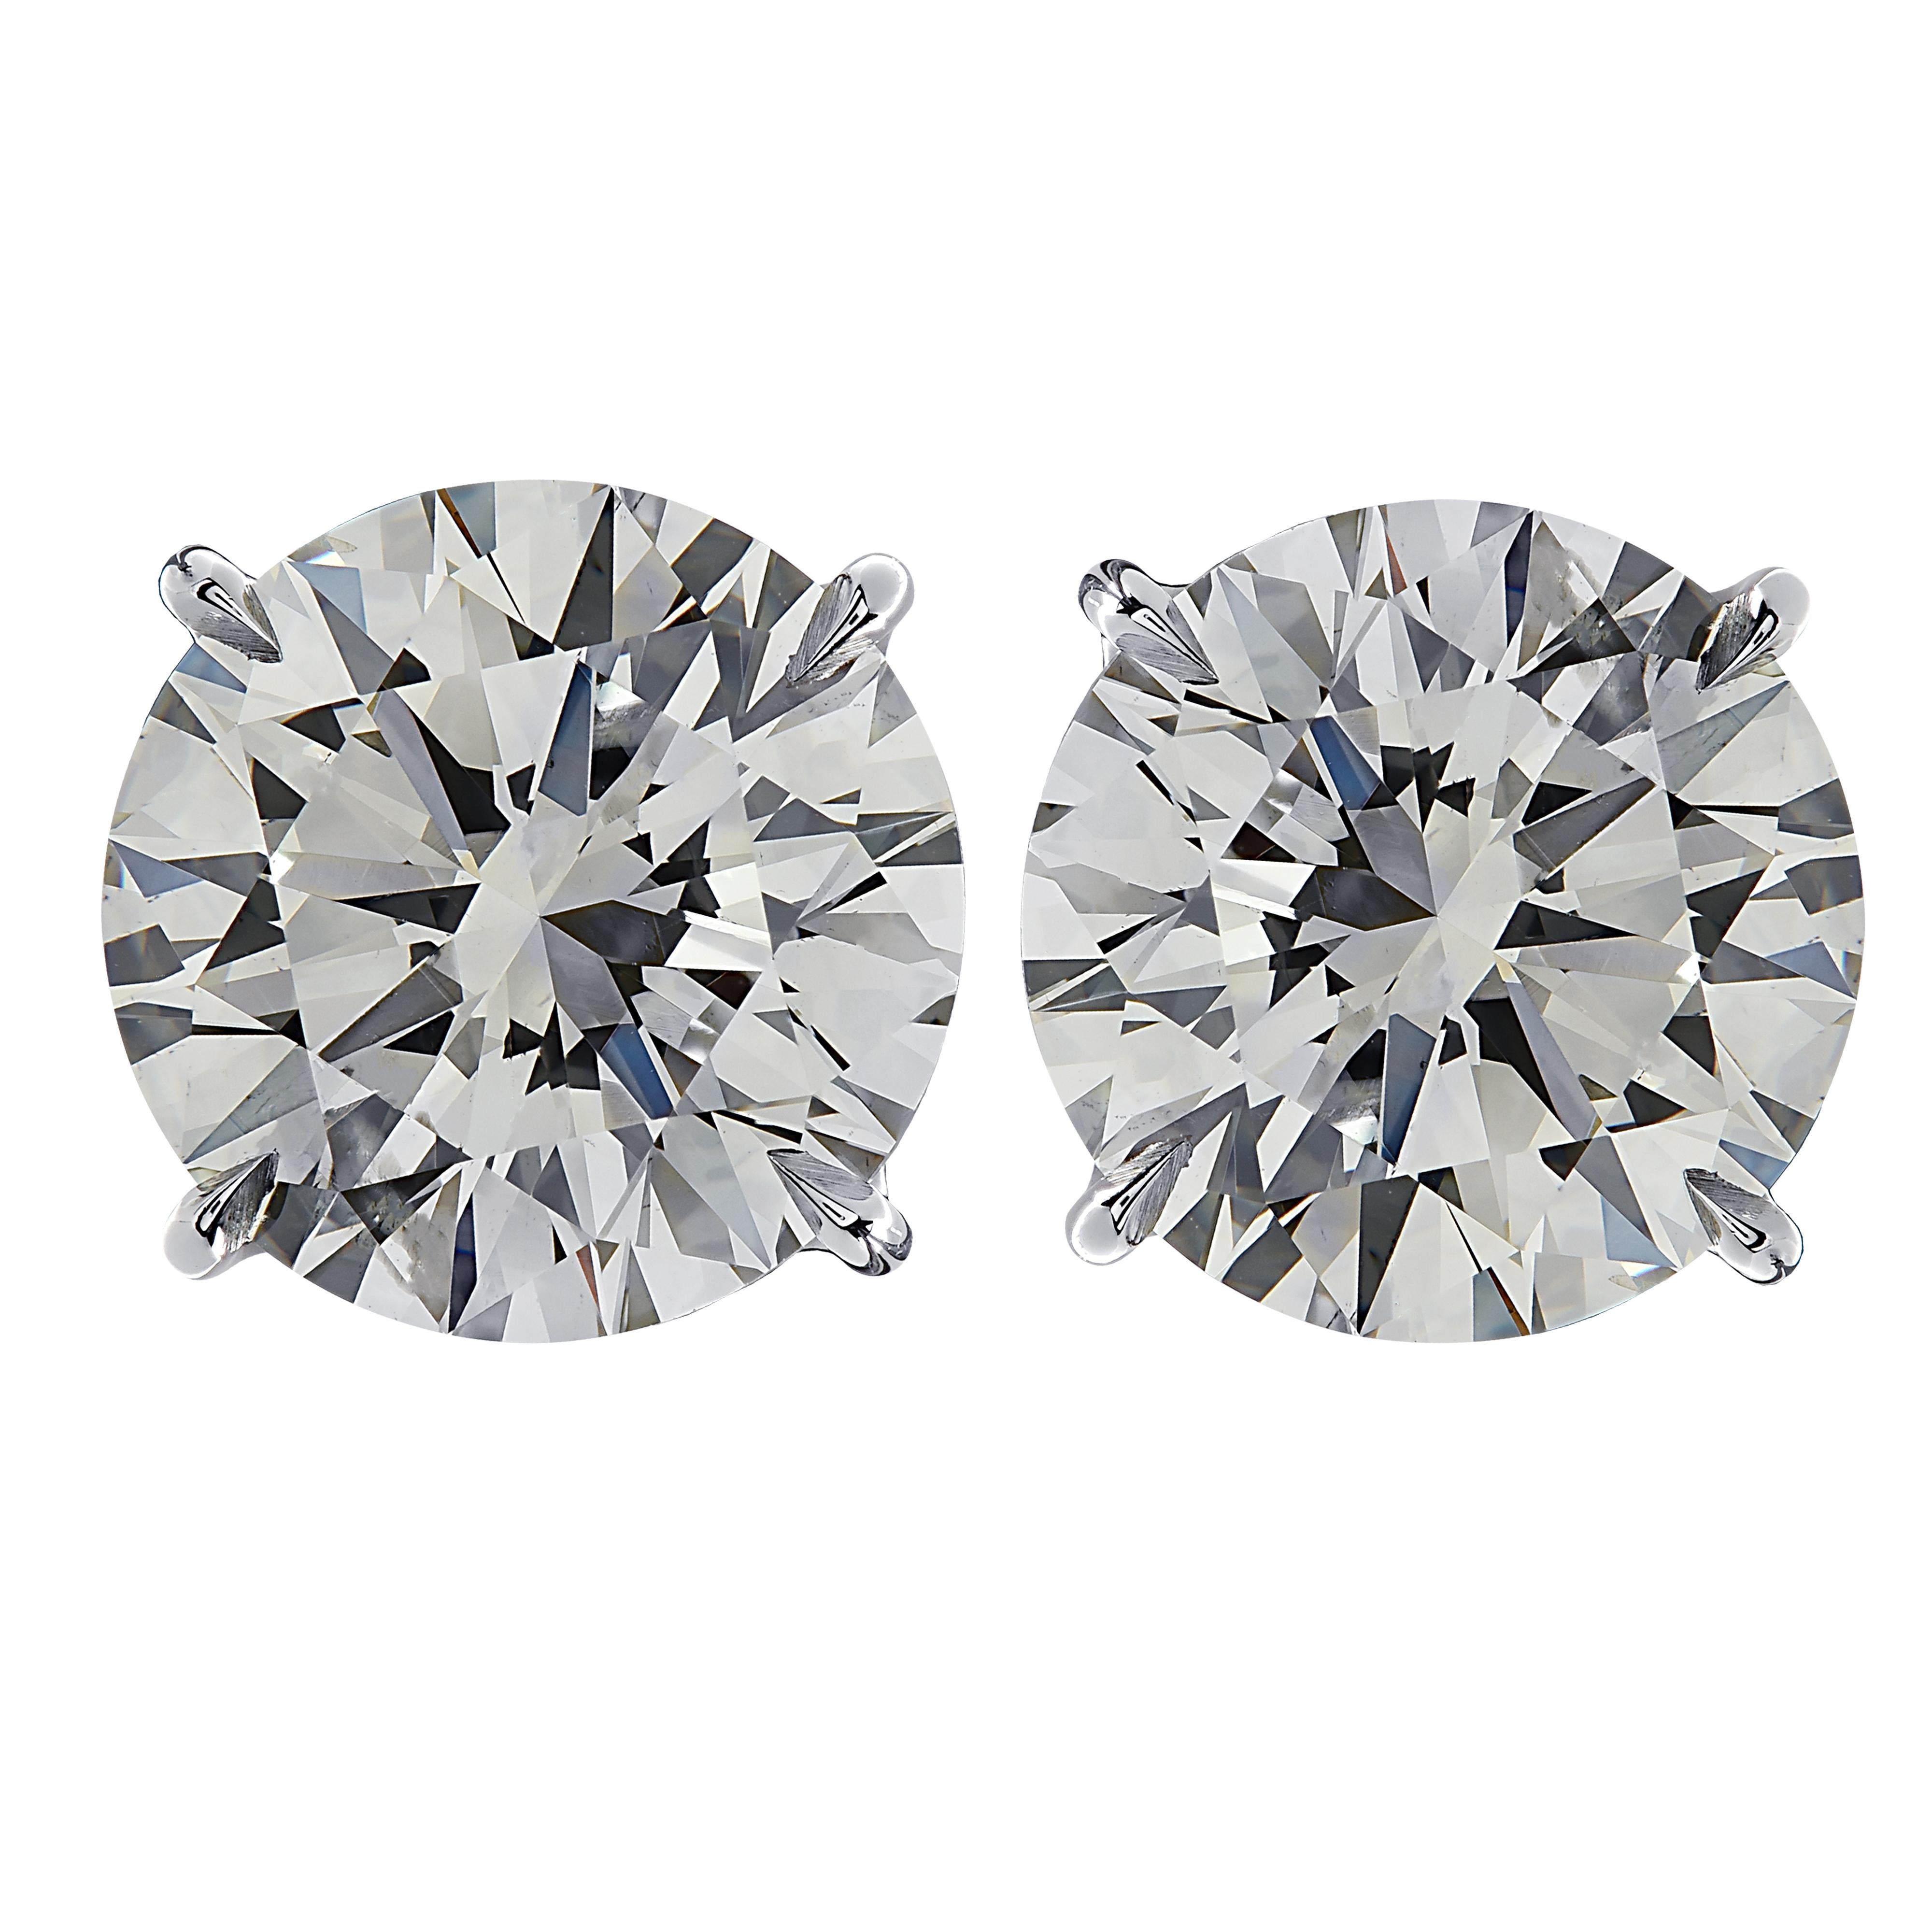 Round Cut Vivid Diamonds GIA Certified 4.55 Carat Diamond Stud Earrings